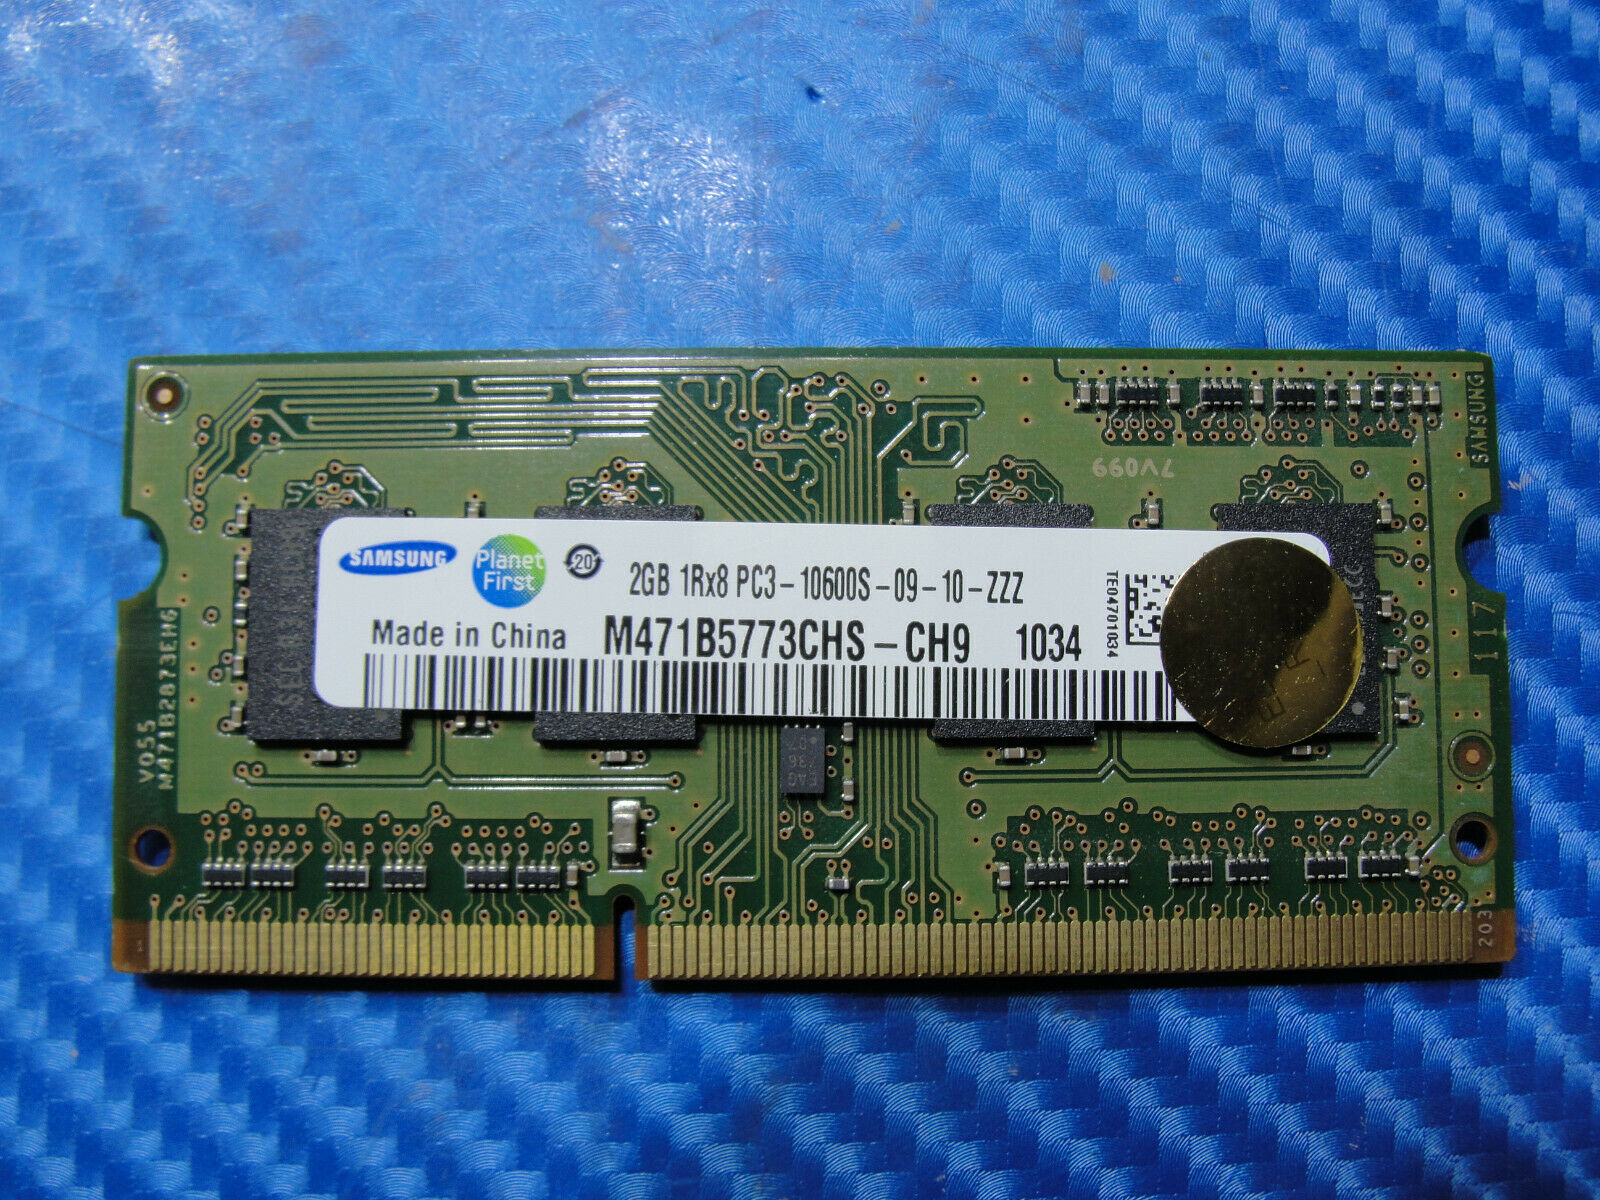 Dell M17x R2 Laptop Samsung 2GB Memory PC3-10600S-09-10-ZZZ M471B5773CHS-CH9 Samsung